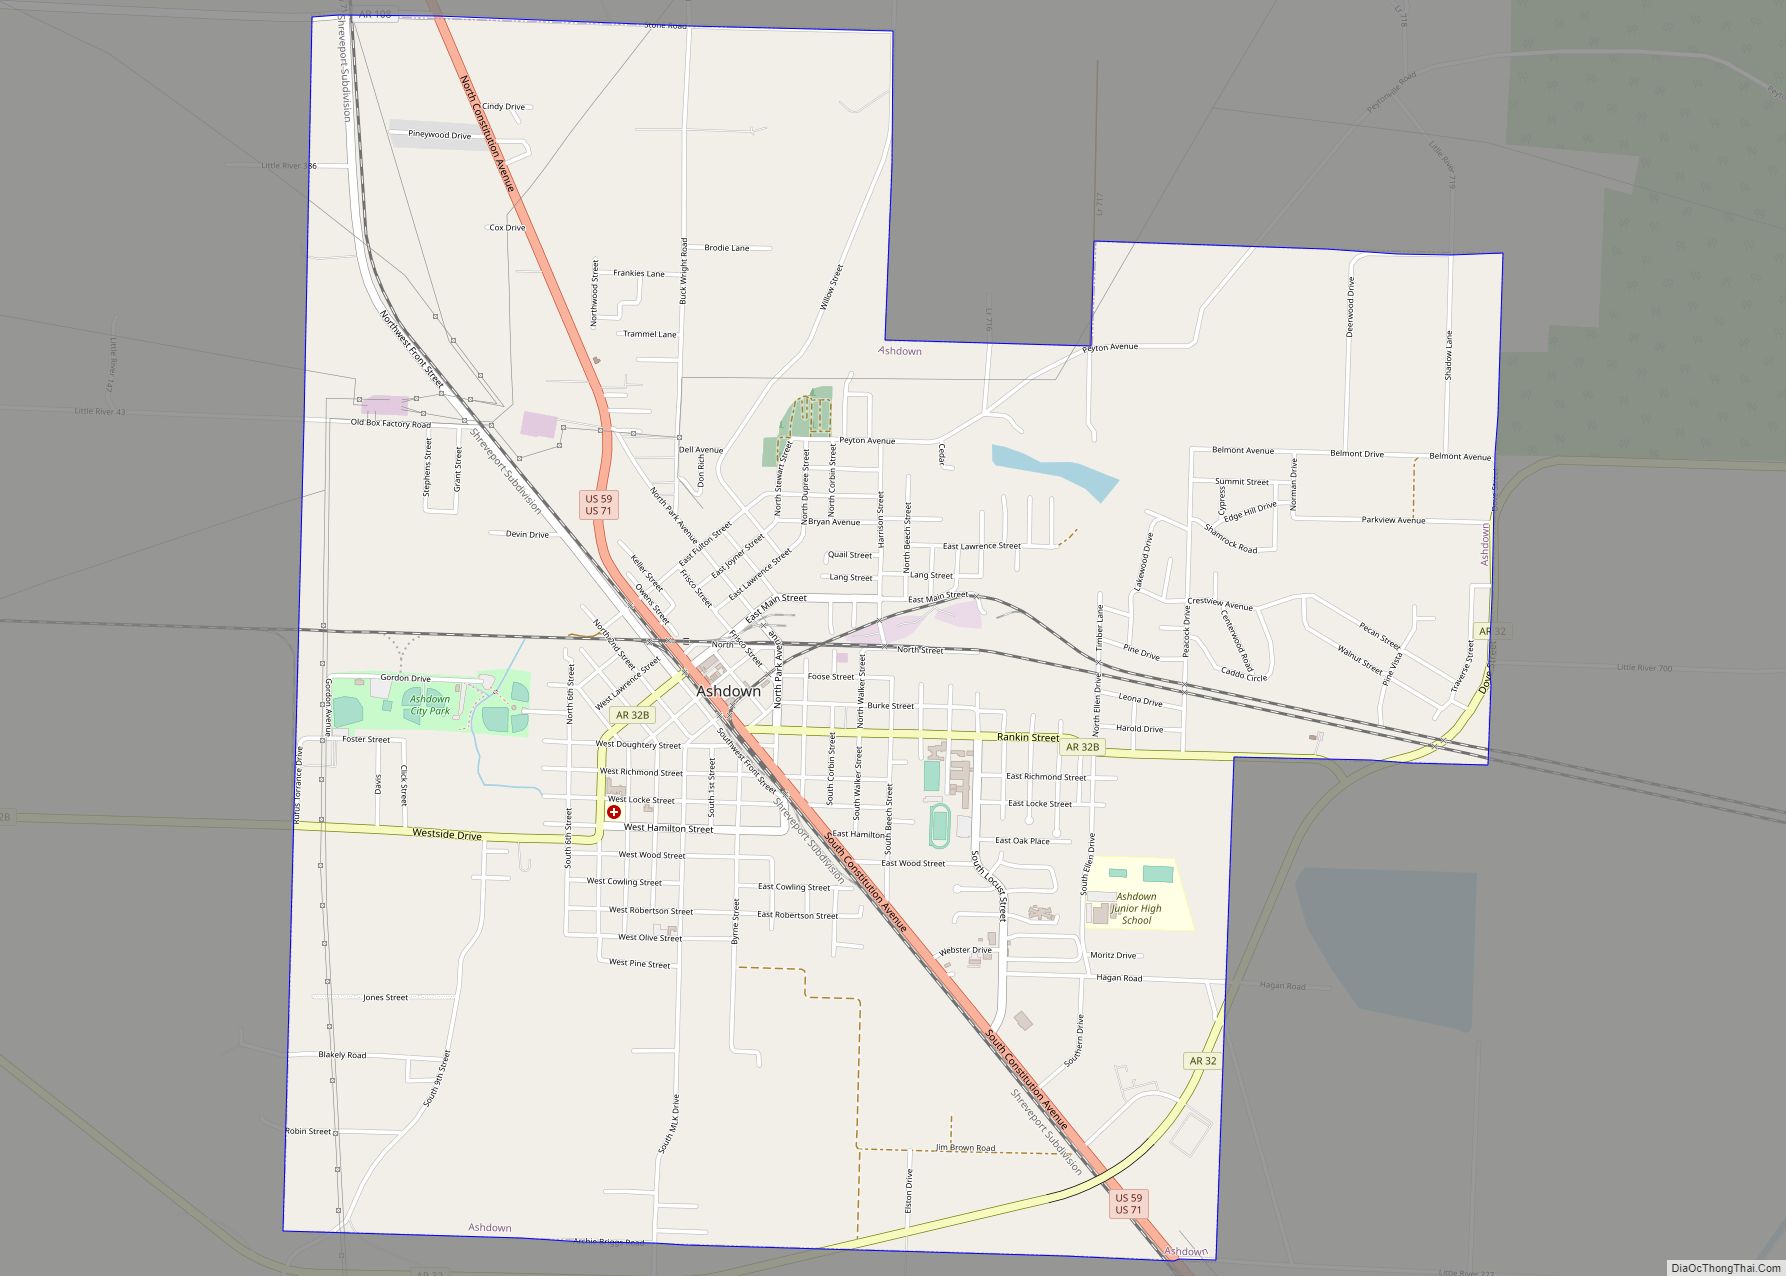 Map of Ashdown city